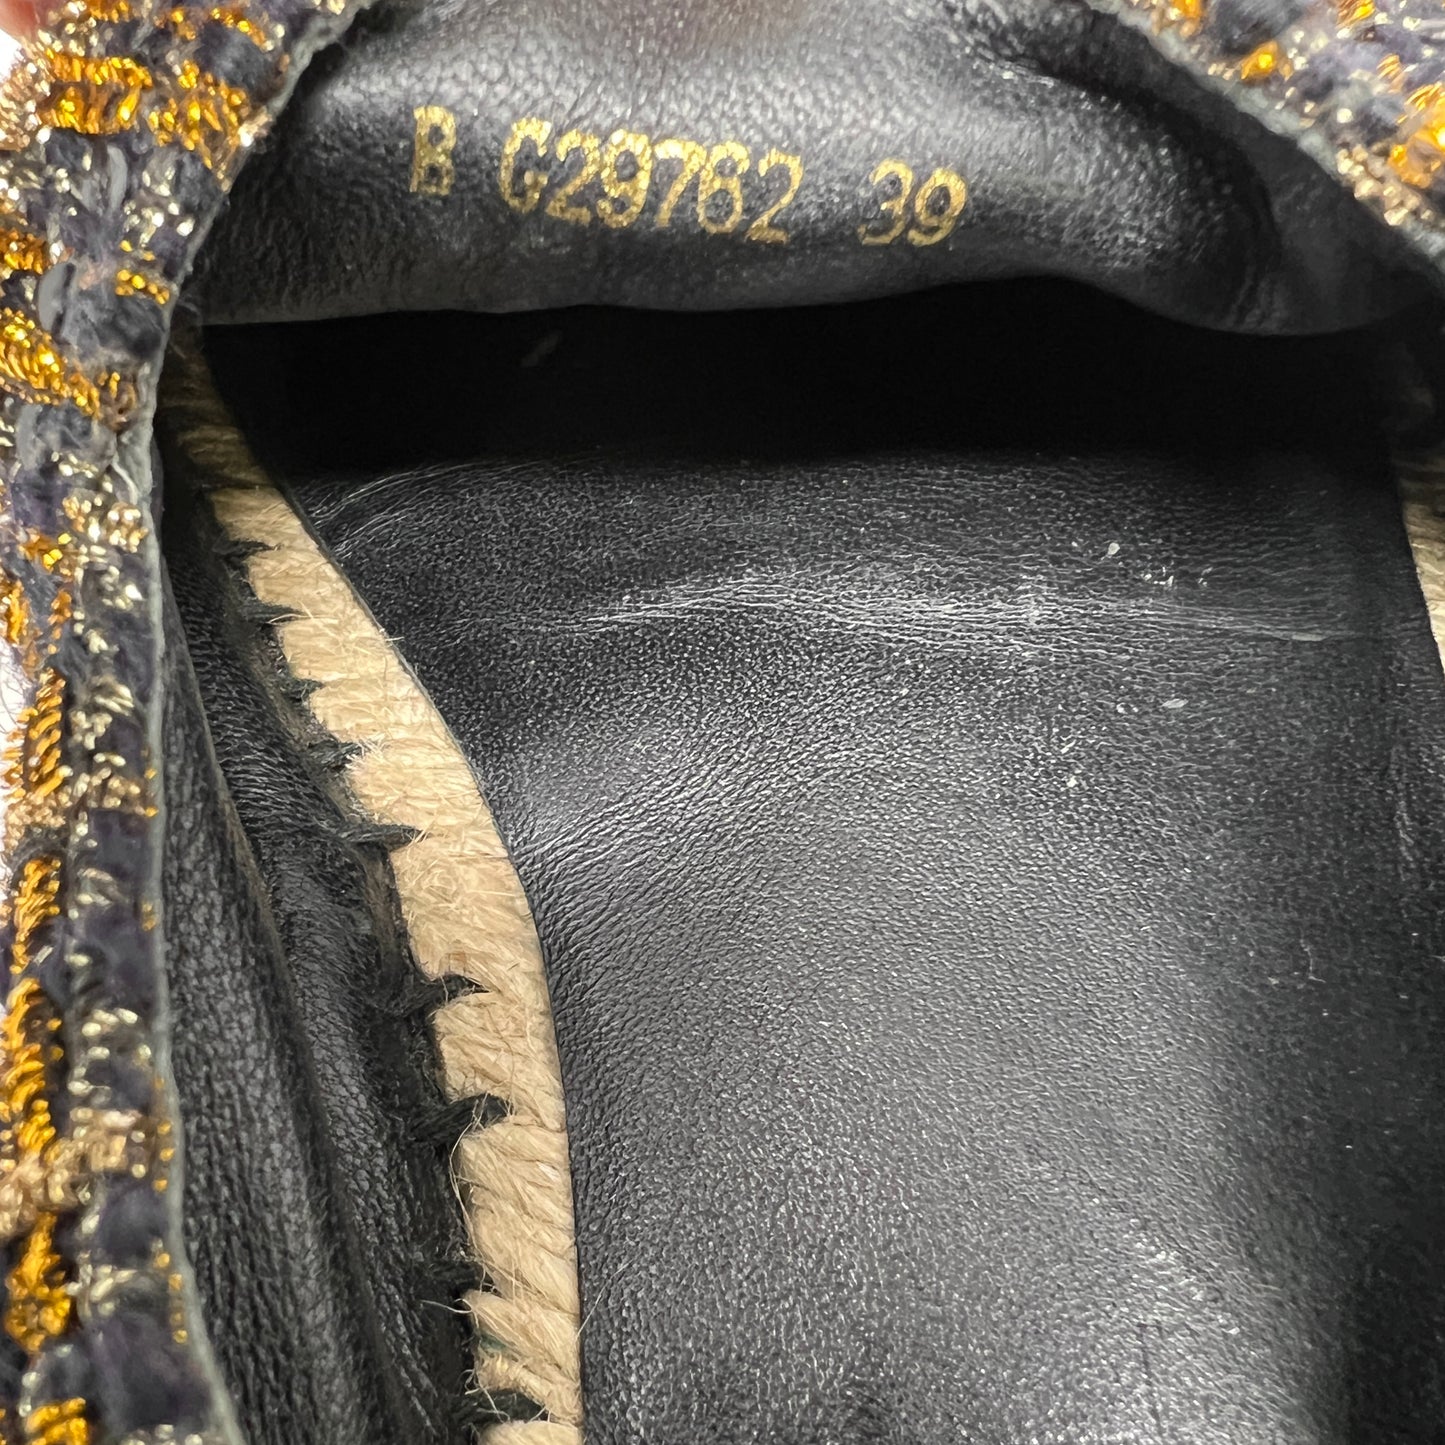 Chanel Black Grosgrain Cap Toe Gold Metallic Tweed Espadrille Flats Size EU 39